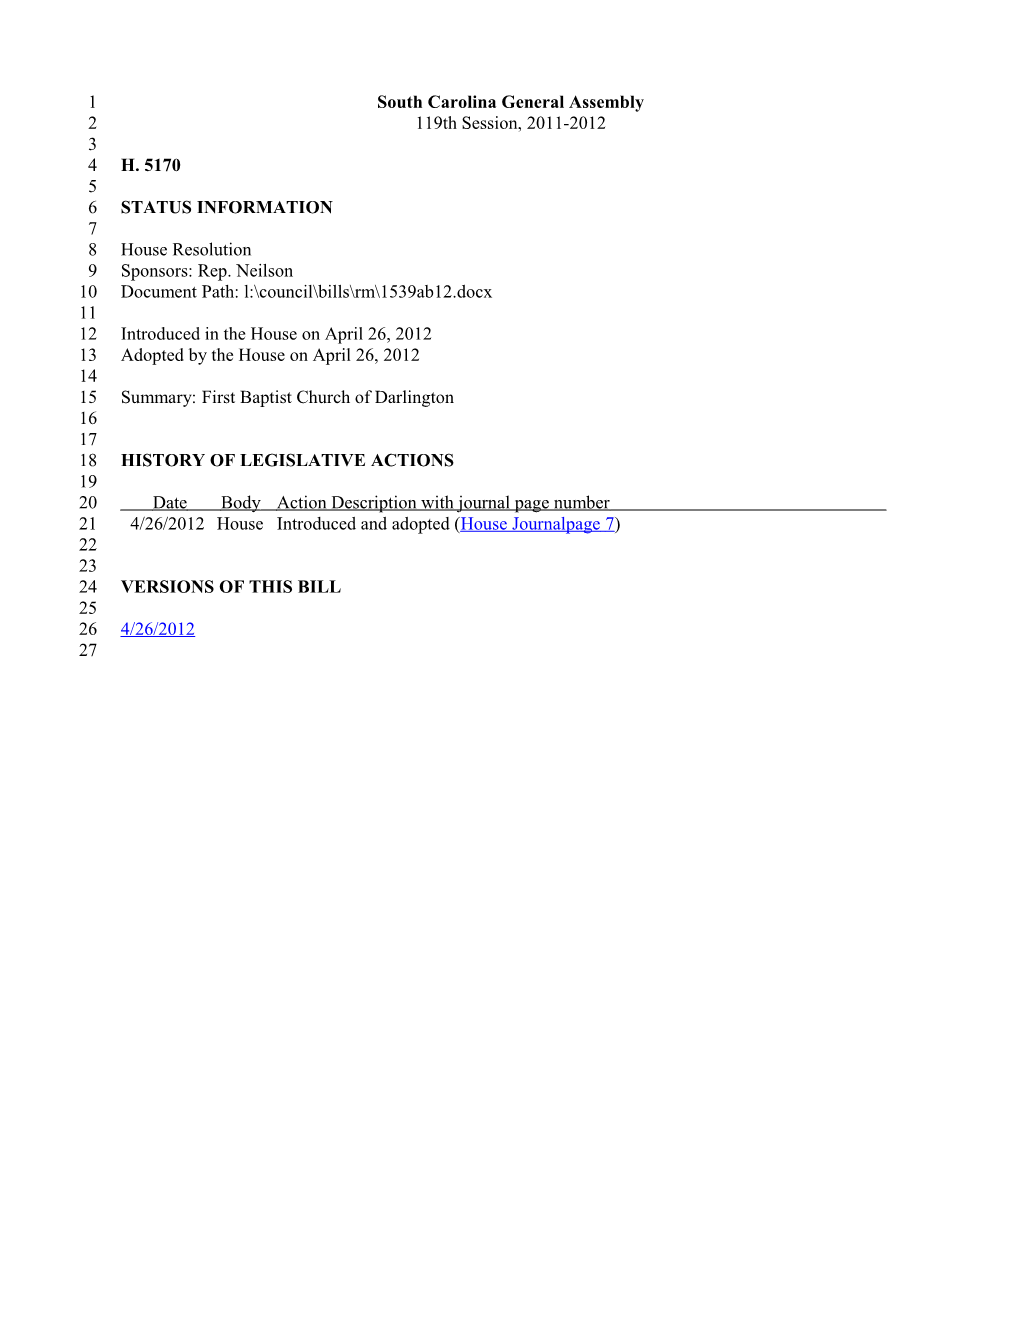 2011-2012 Bill 5170: First Baptist Church of Darlington - South Carolina Legislature Online